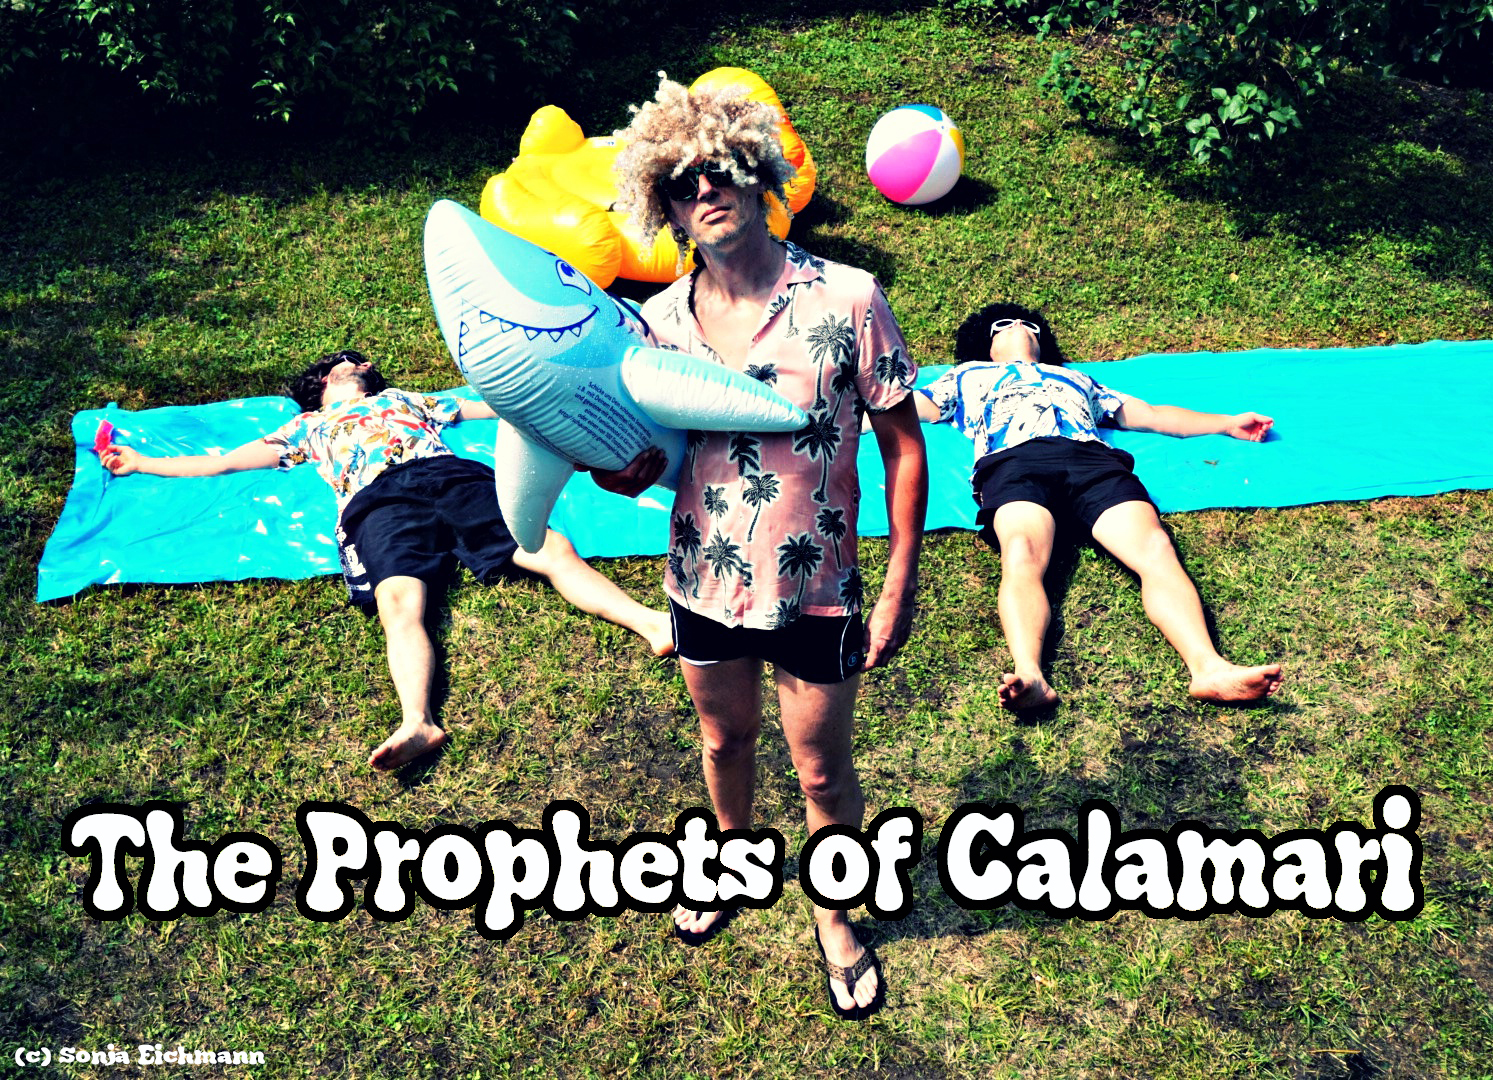 THE PROPHETS OF CALAMARI